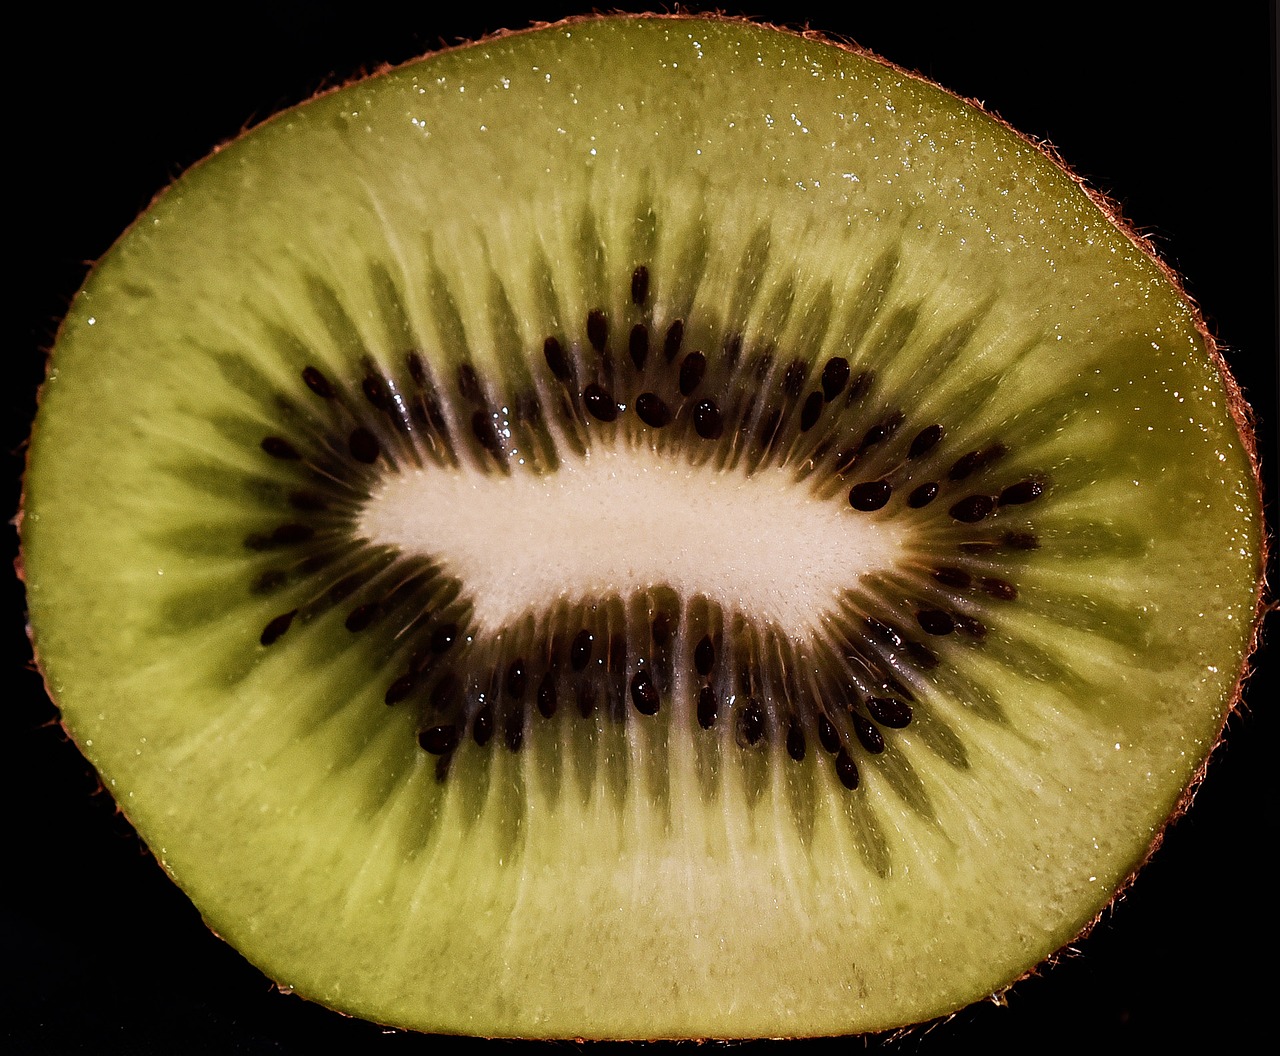 kiwi fruit fetus free photo